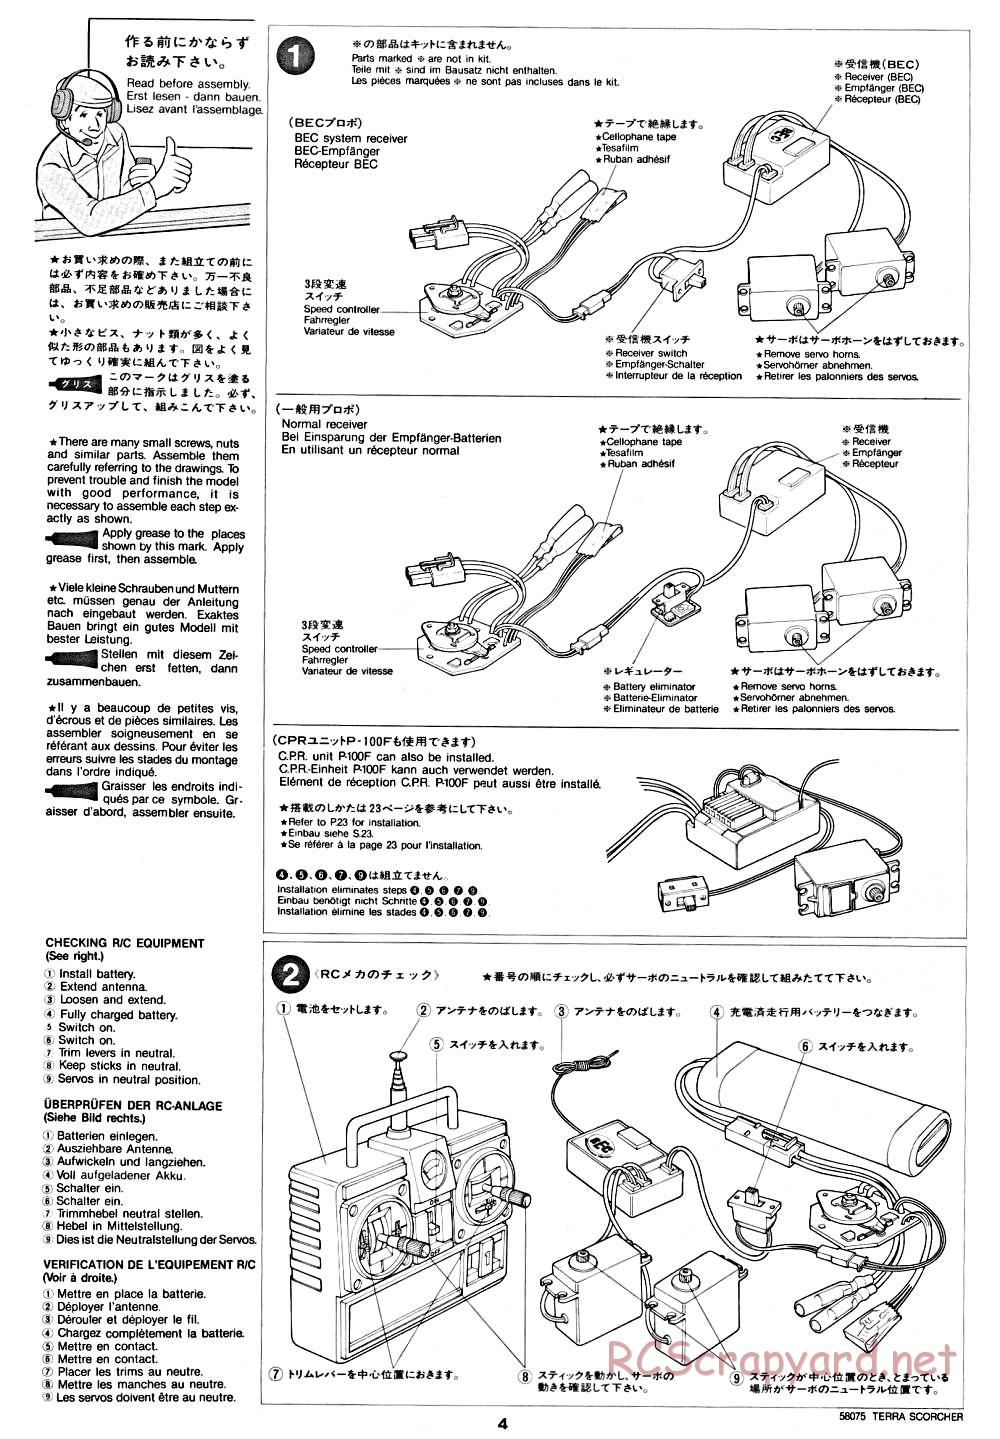 Tamiya - Terra Scorcher - 58075 - Manual - Page 4